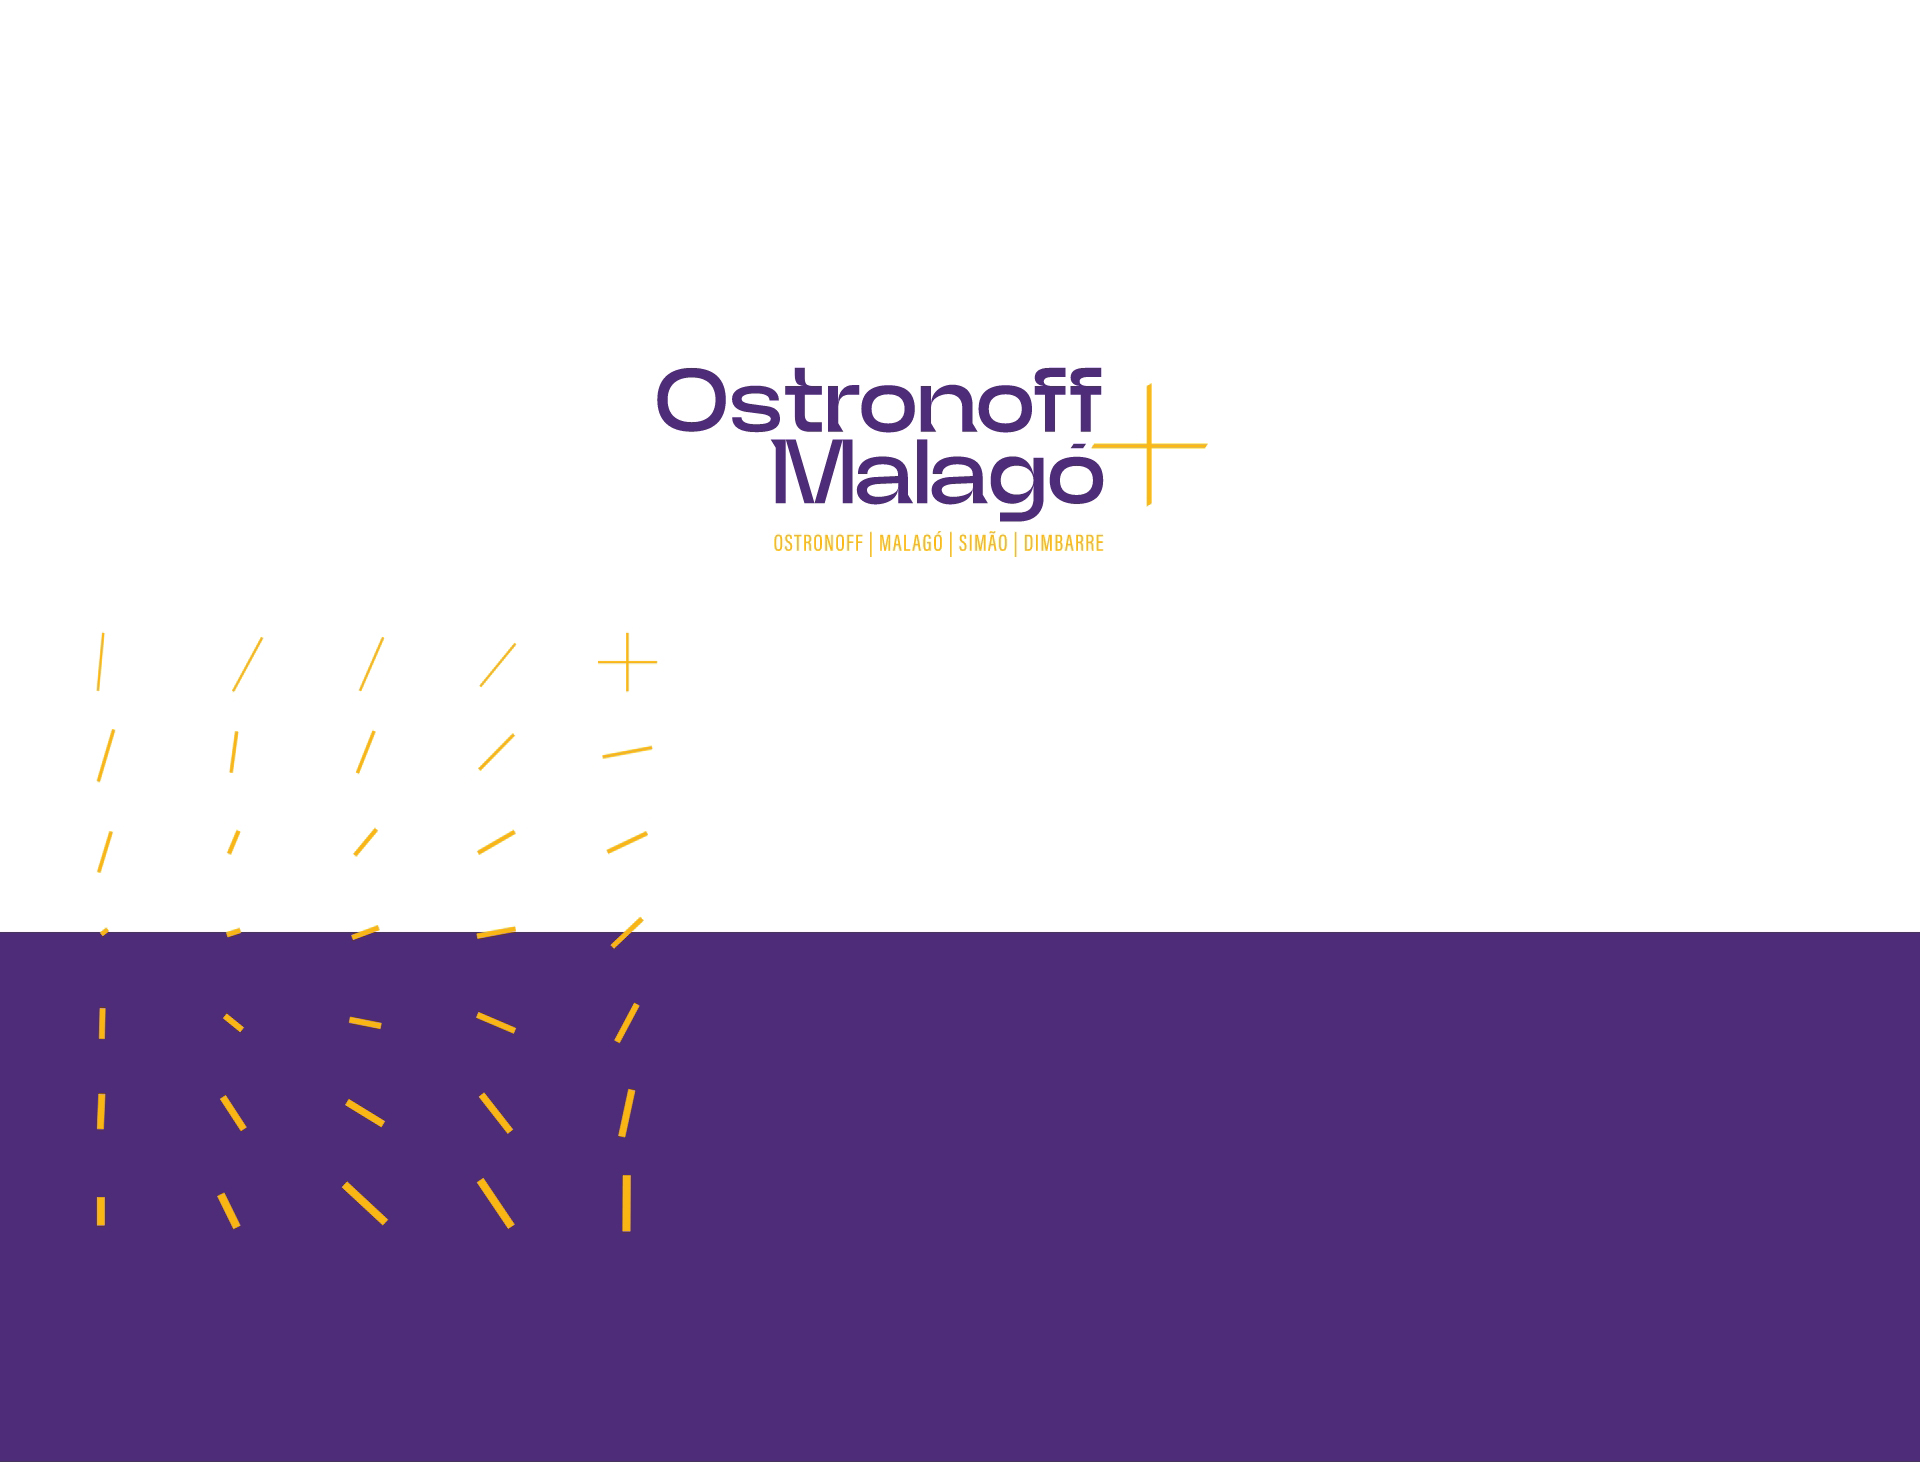 Identidade Visual Ostronoff Malagó desenvolvida pela Unitri Design